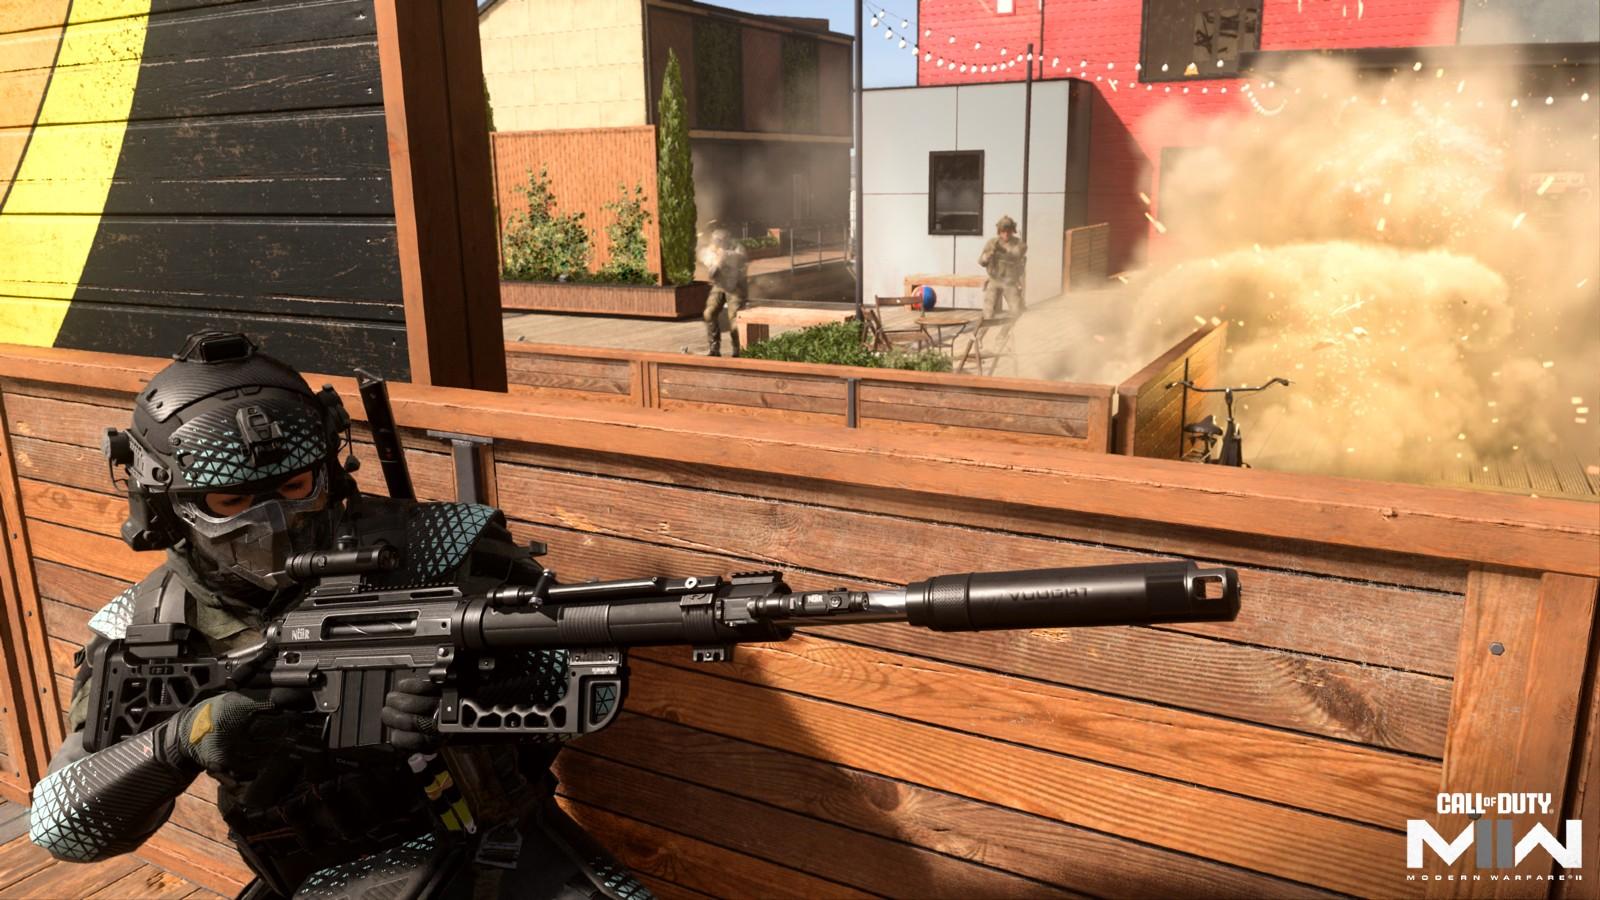 Modern Warfare 2 Season 6 update patch notes: New weapons, maps